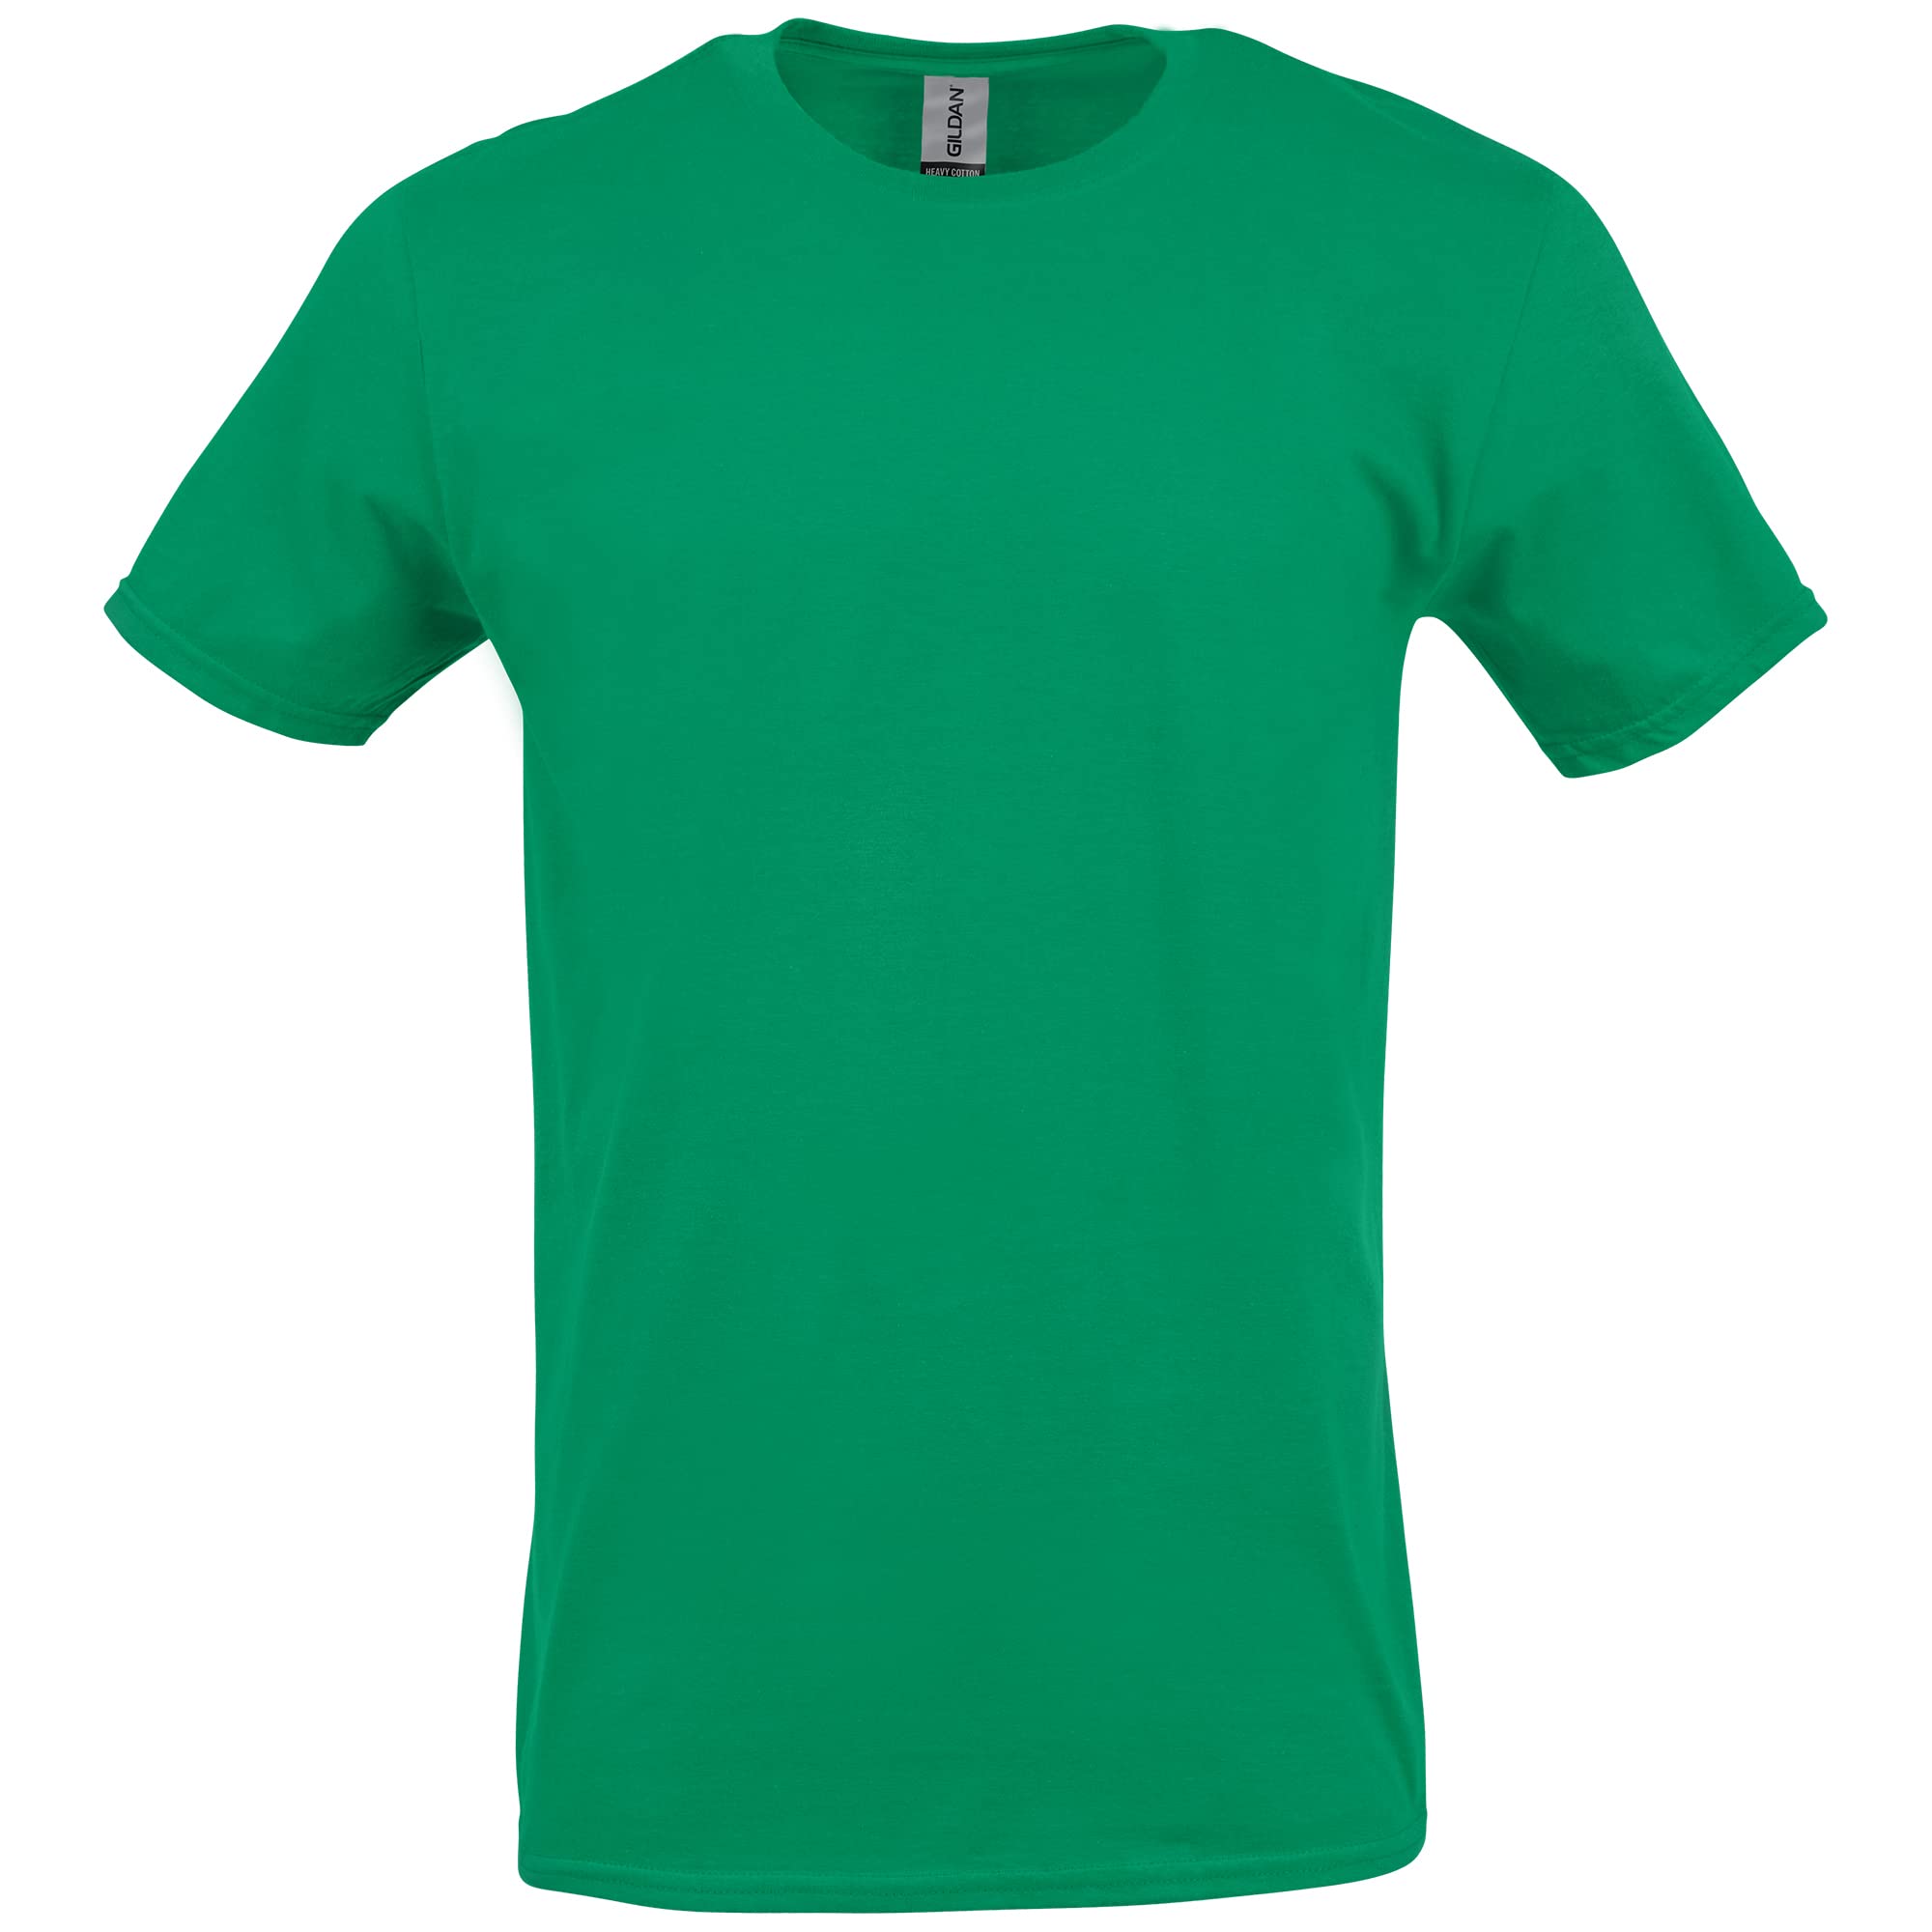 Gildan Men's Heavy Cotton T-Shirt, Style G5000, Multipack